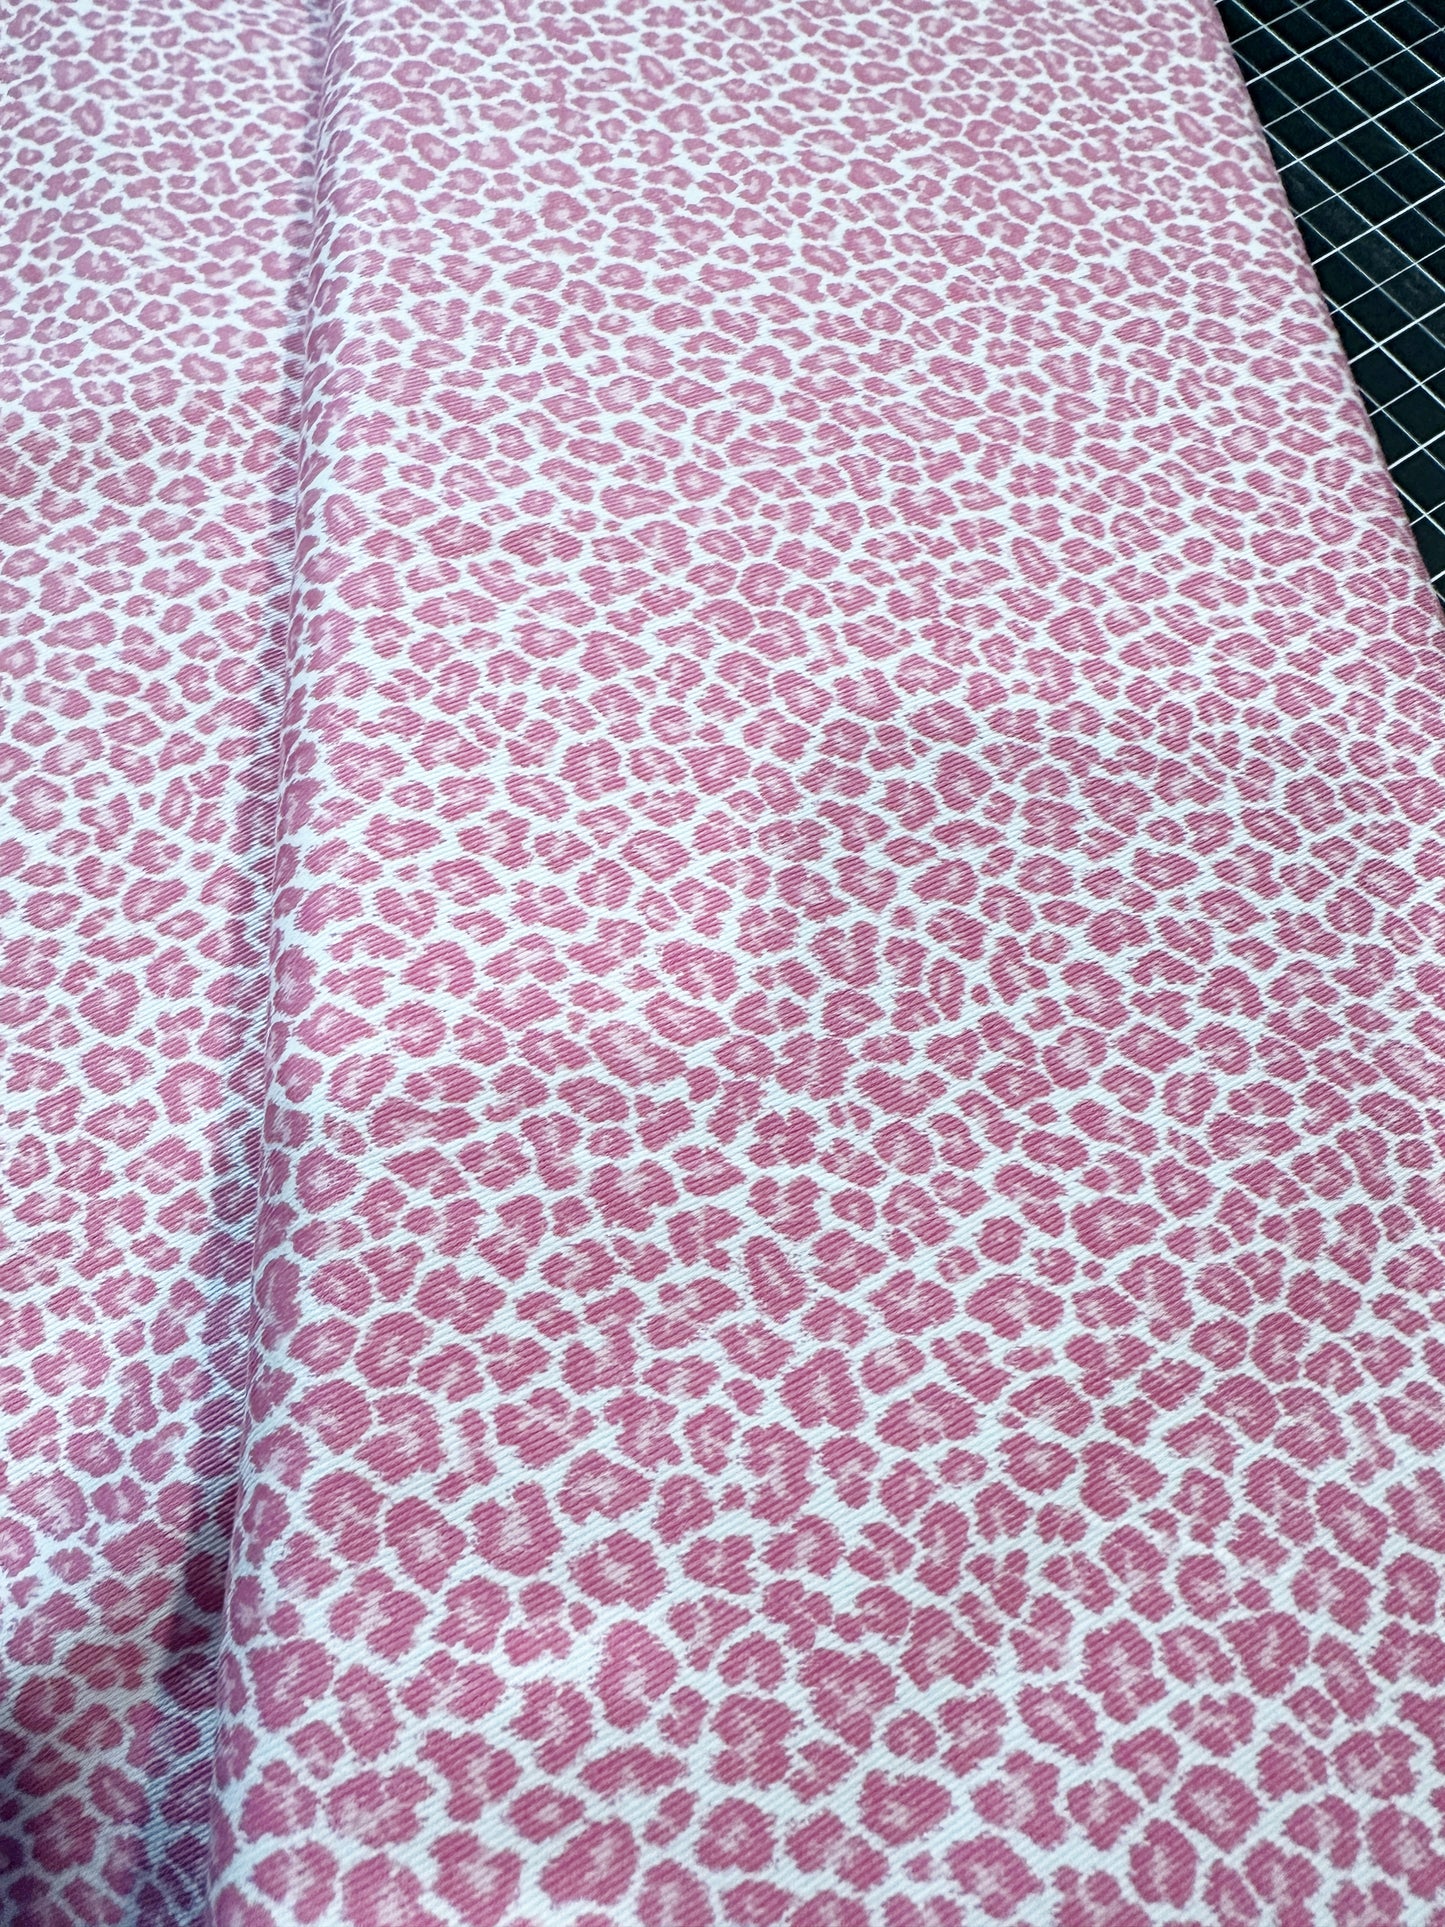 Wild Cheetah Pink Soft fabric